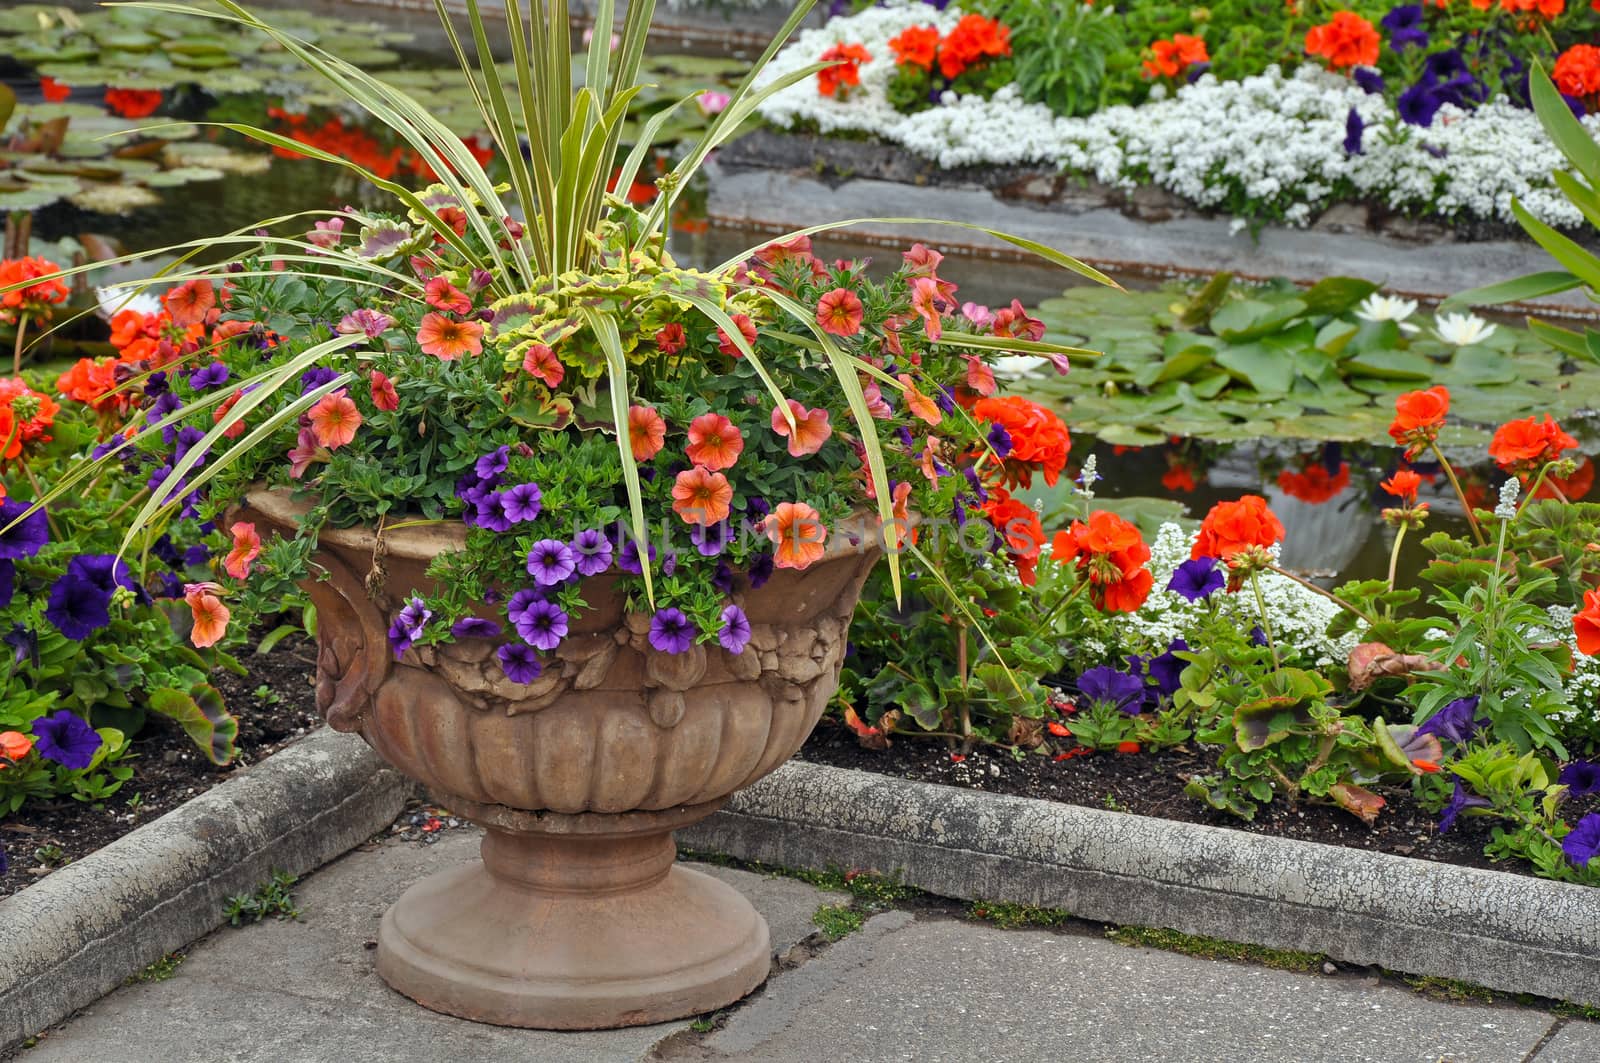 Decorative petunia planter next to garden pond